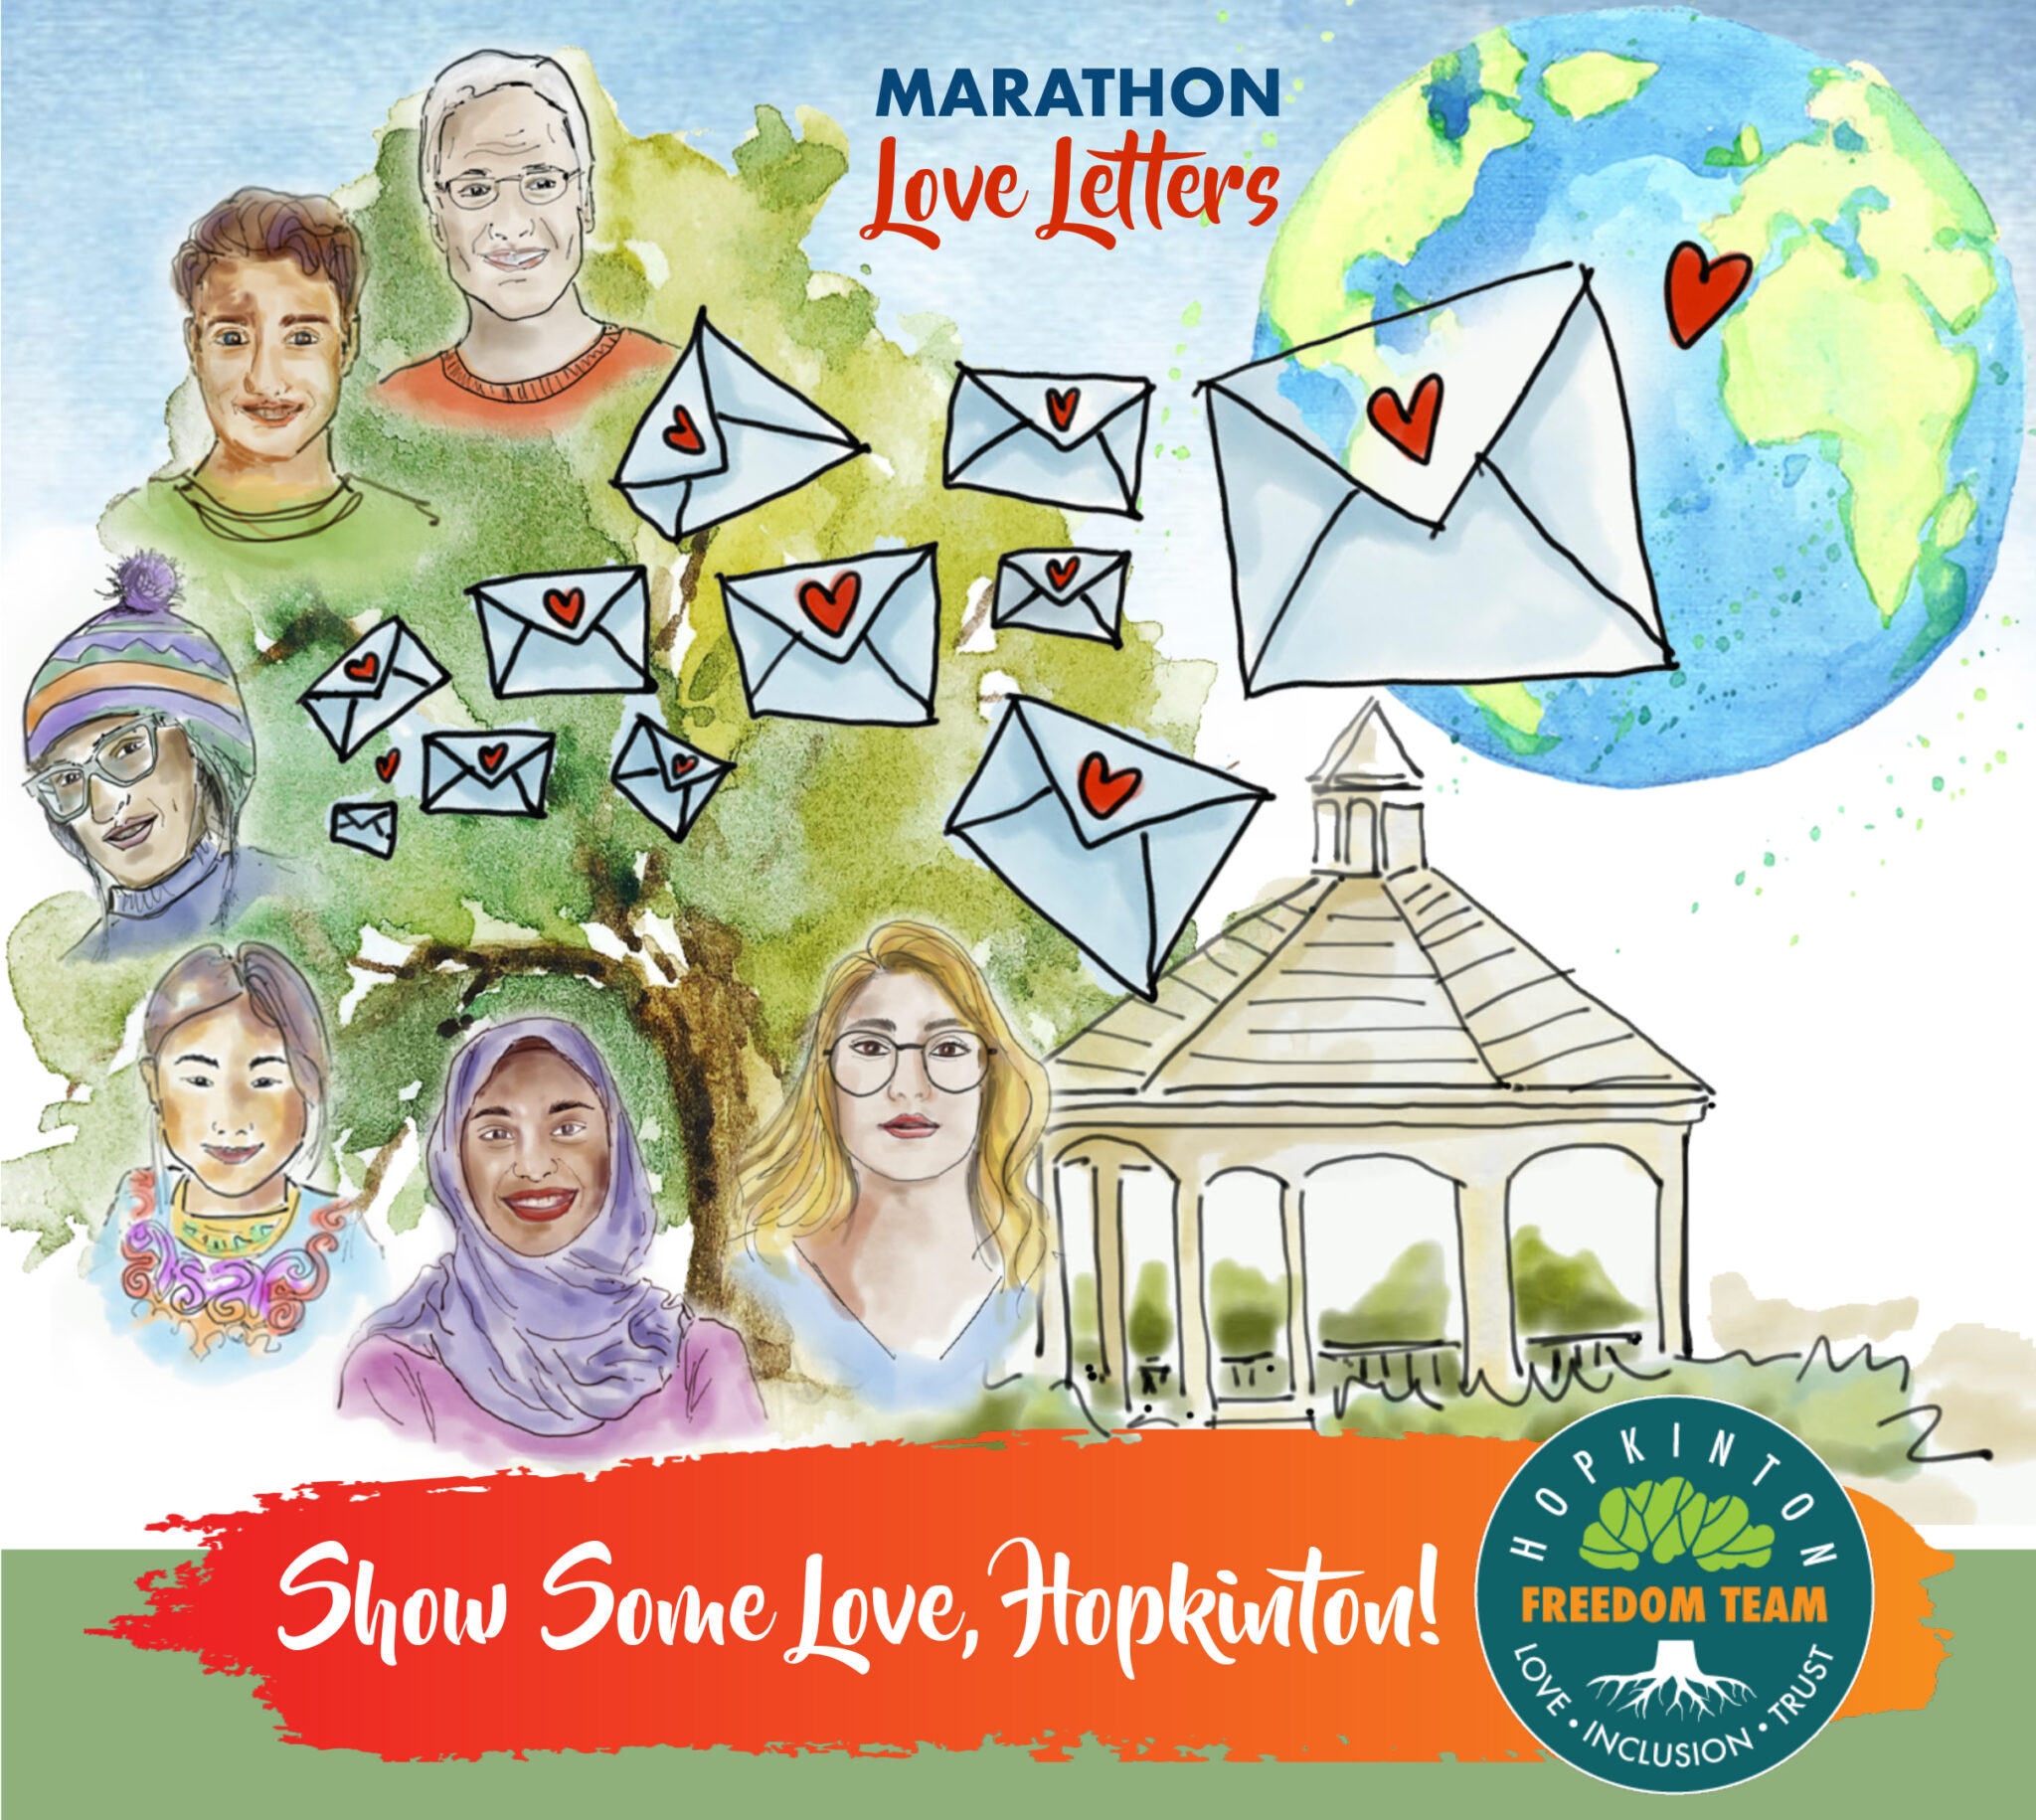 ‘Love Letter’ film welcomes back marathoners to Hopkinton